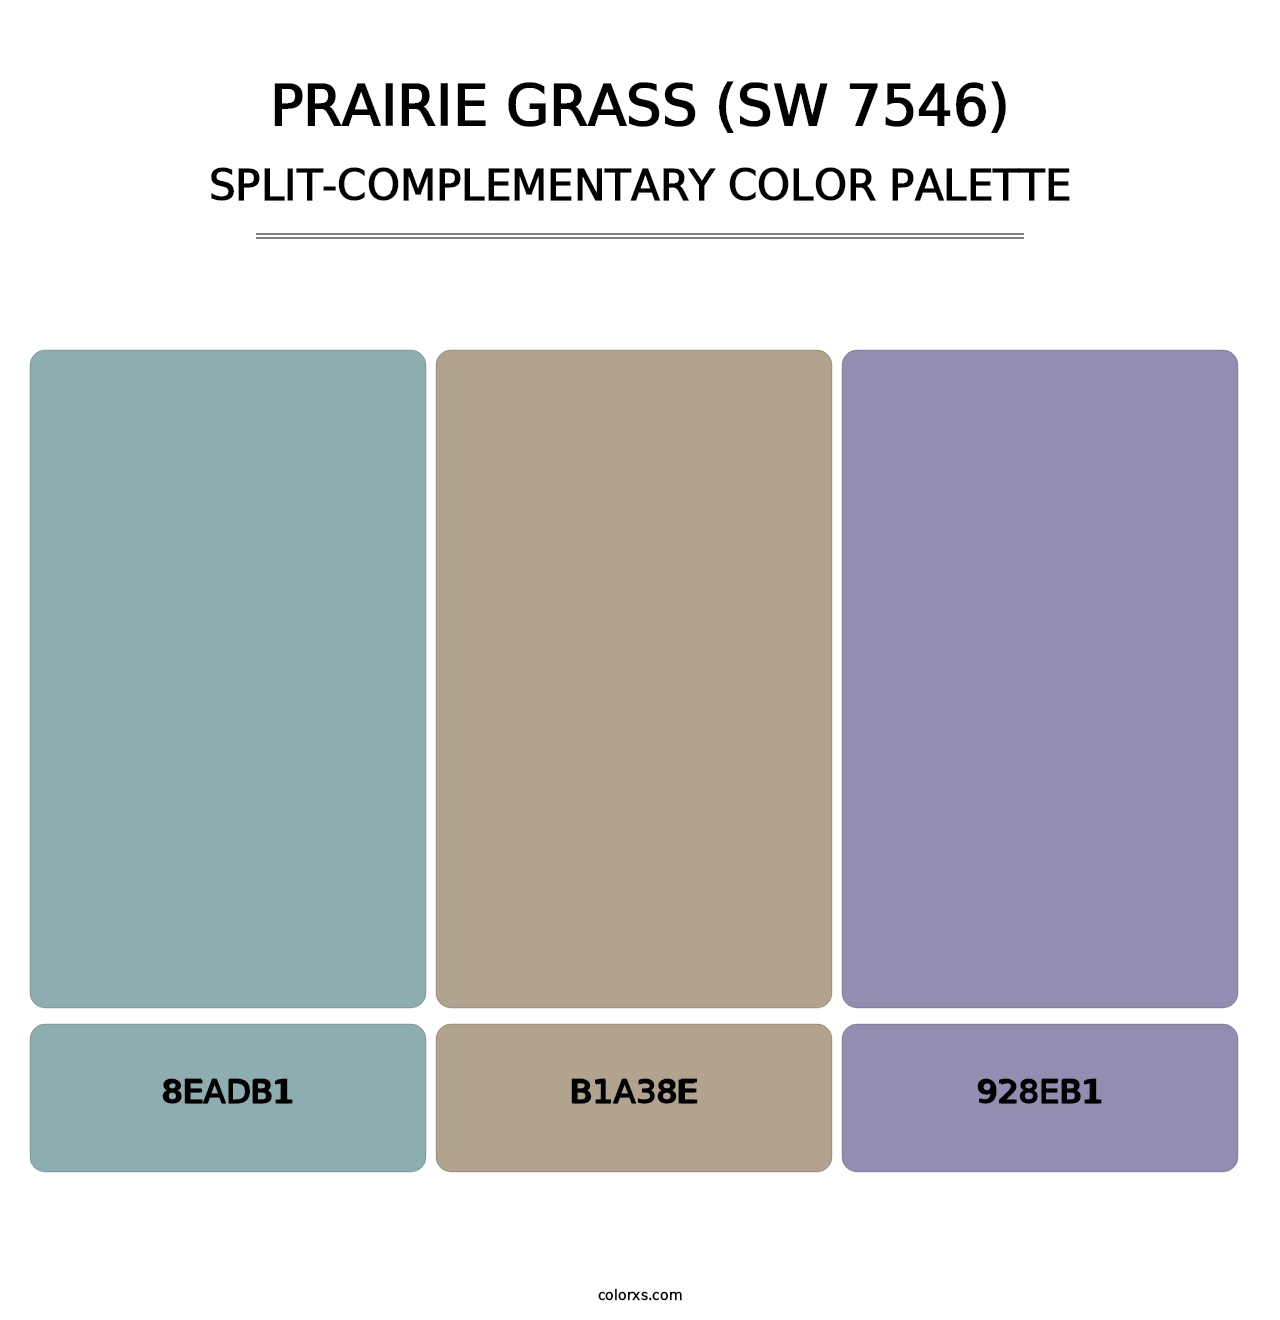 Prairie Grass (SW 7546) - Split-Complementary Color Palette